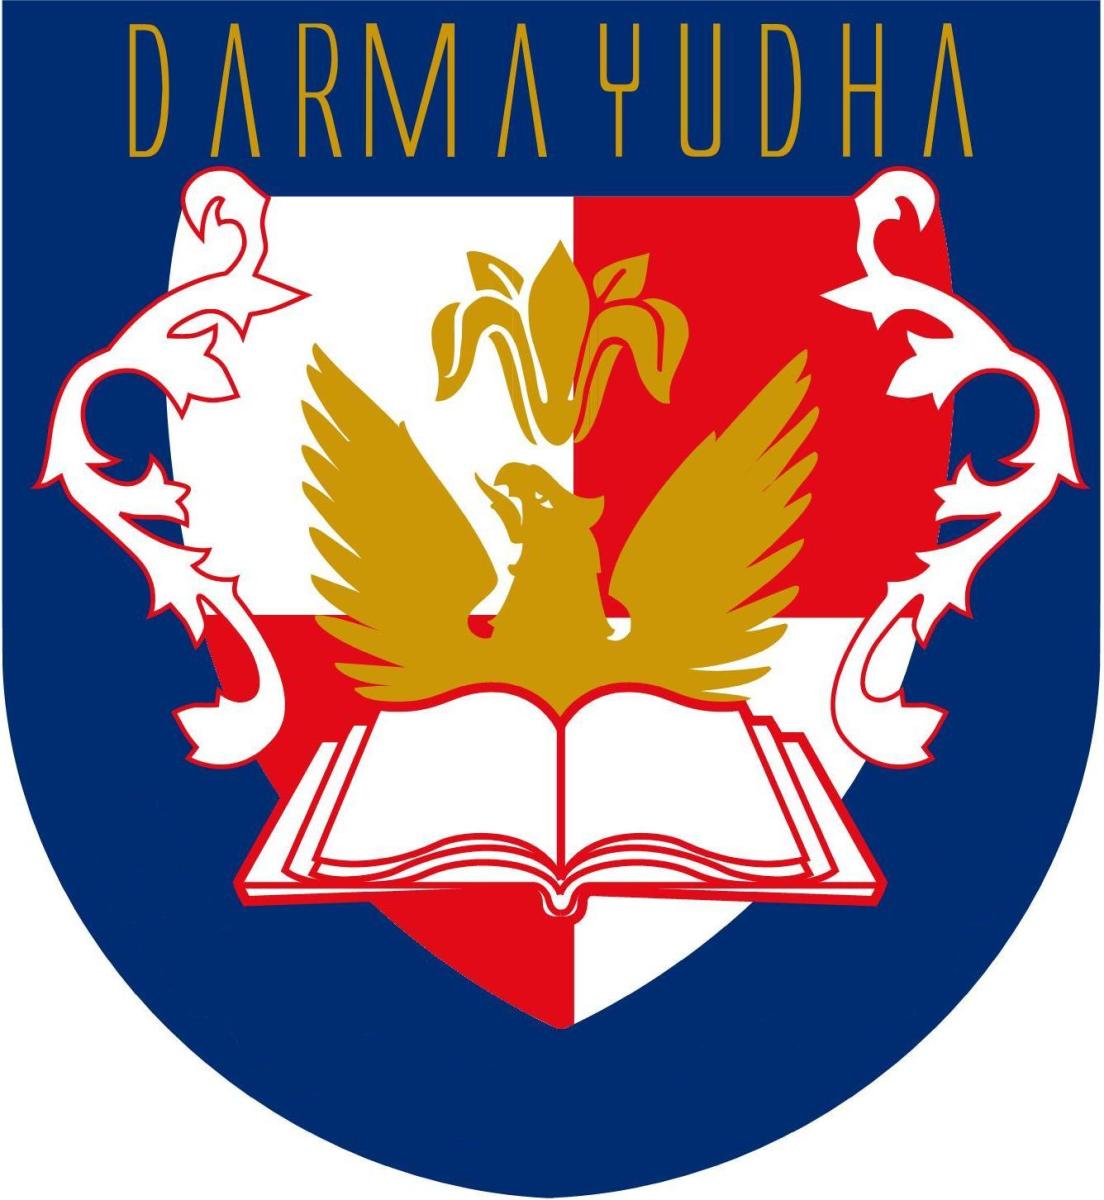 Darma Logo - Logo Darma Yudha | t-clare